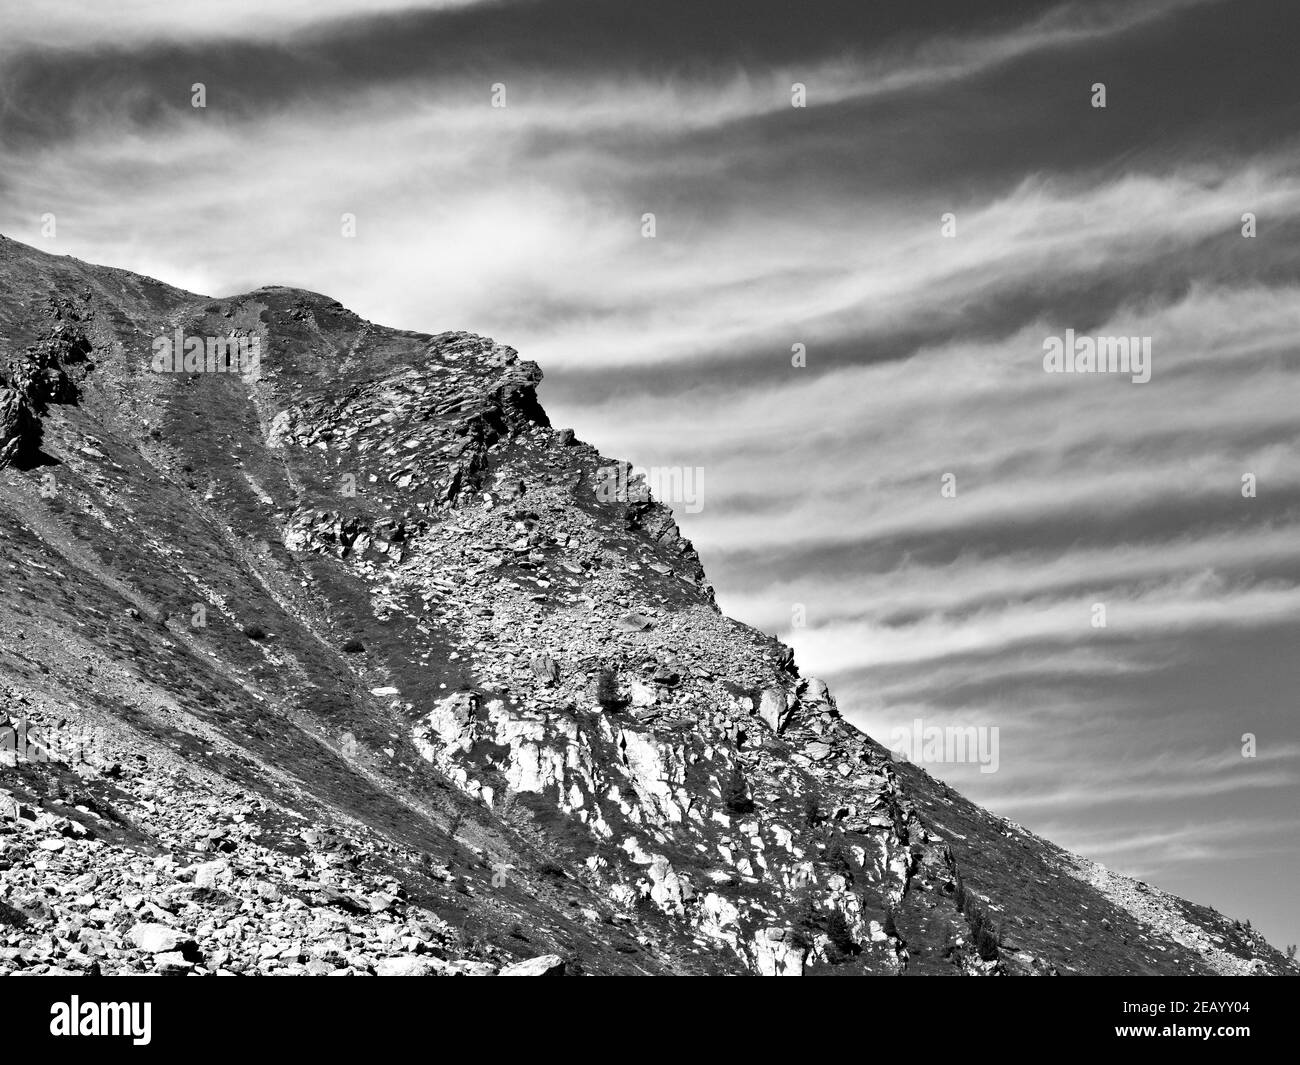 Arpy, Valle d'Aosta (Italia): Cielo strano. Foto Stock